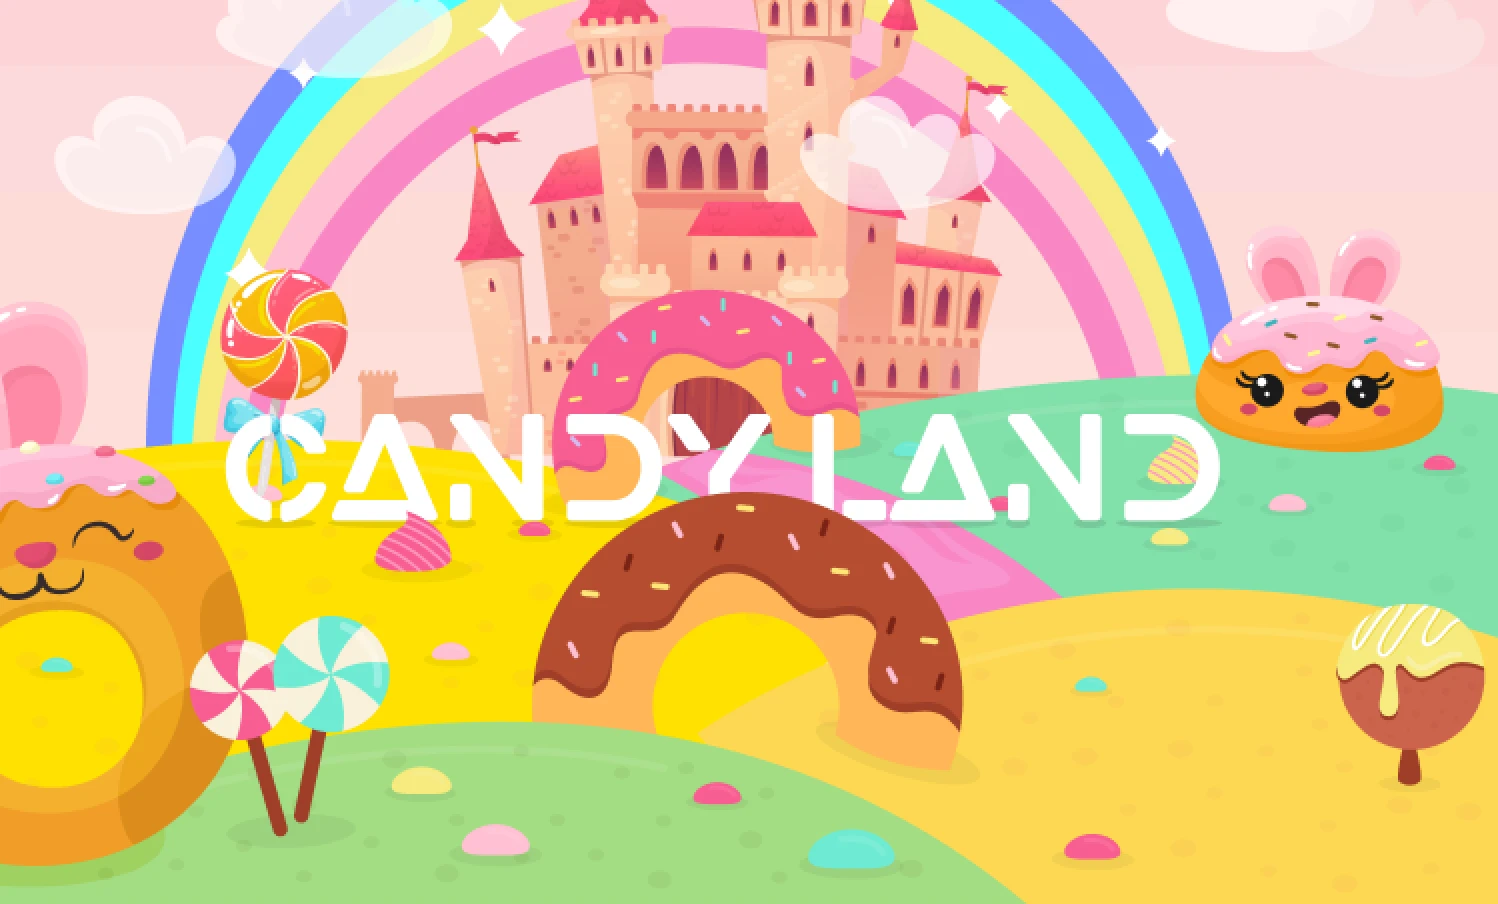 DataViz Candy Land Theme (Light) for Figma and Adobe XD